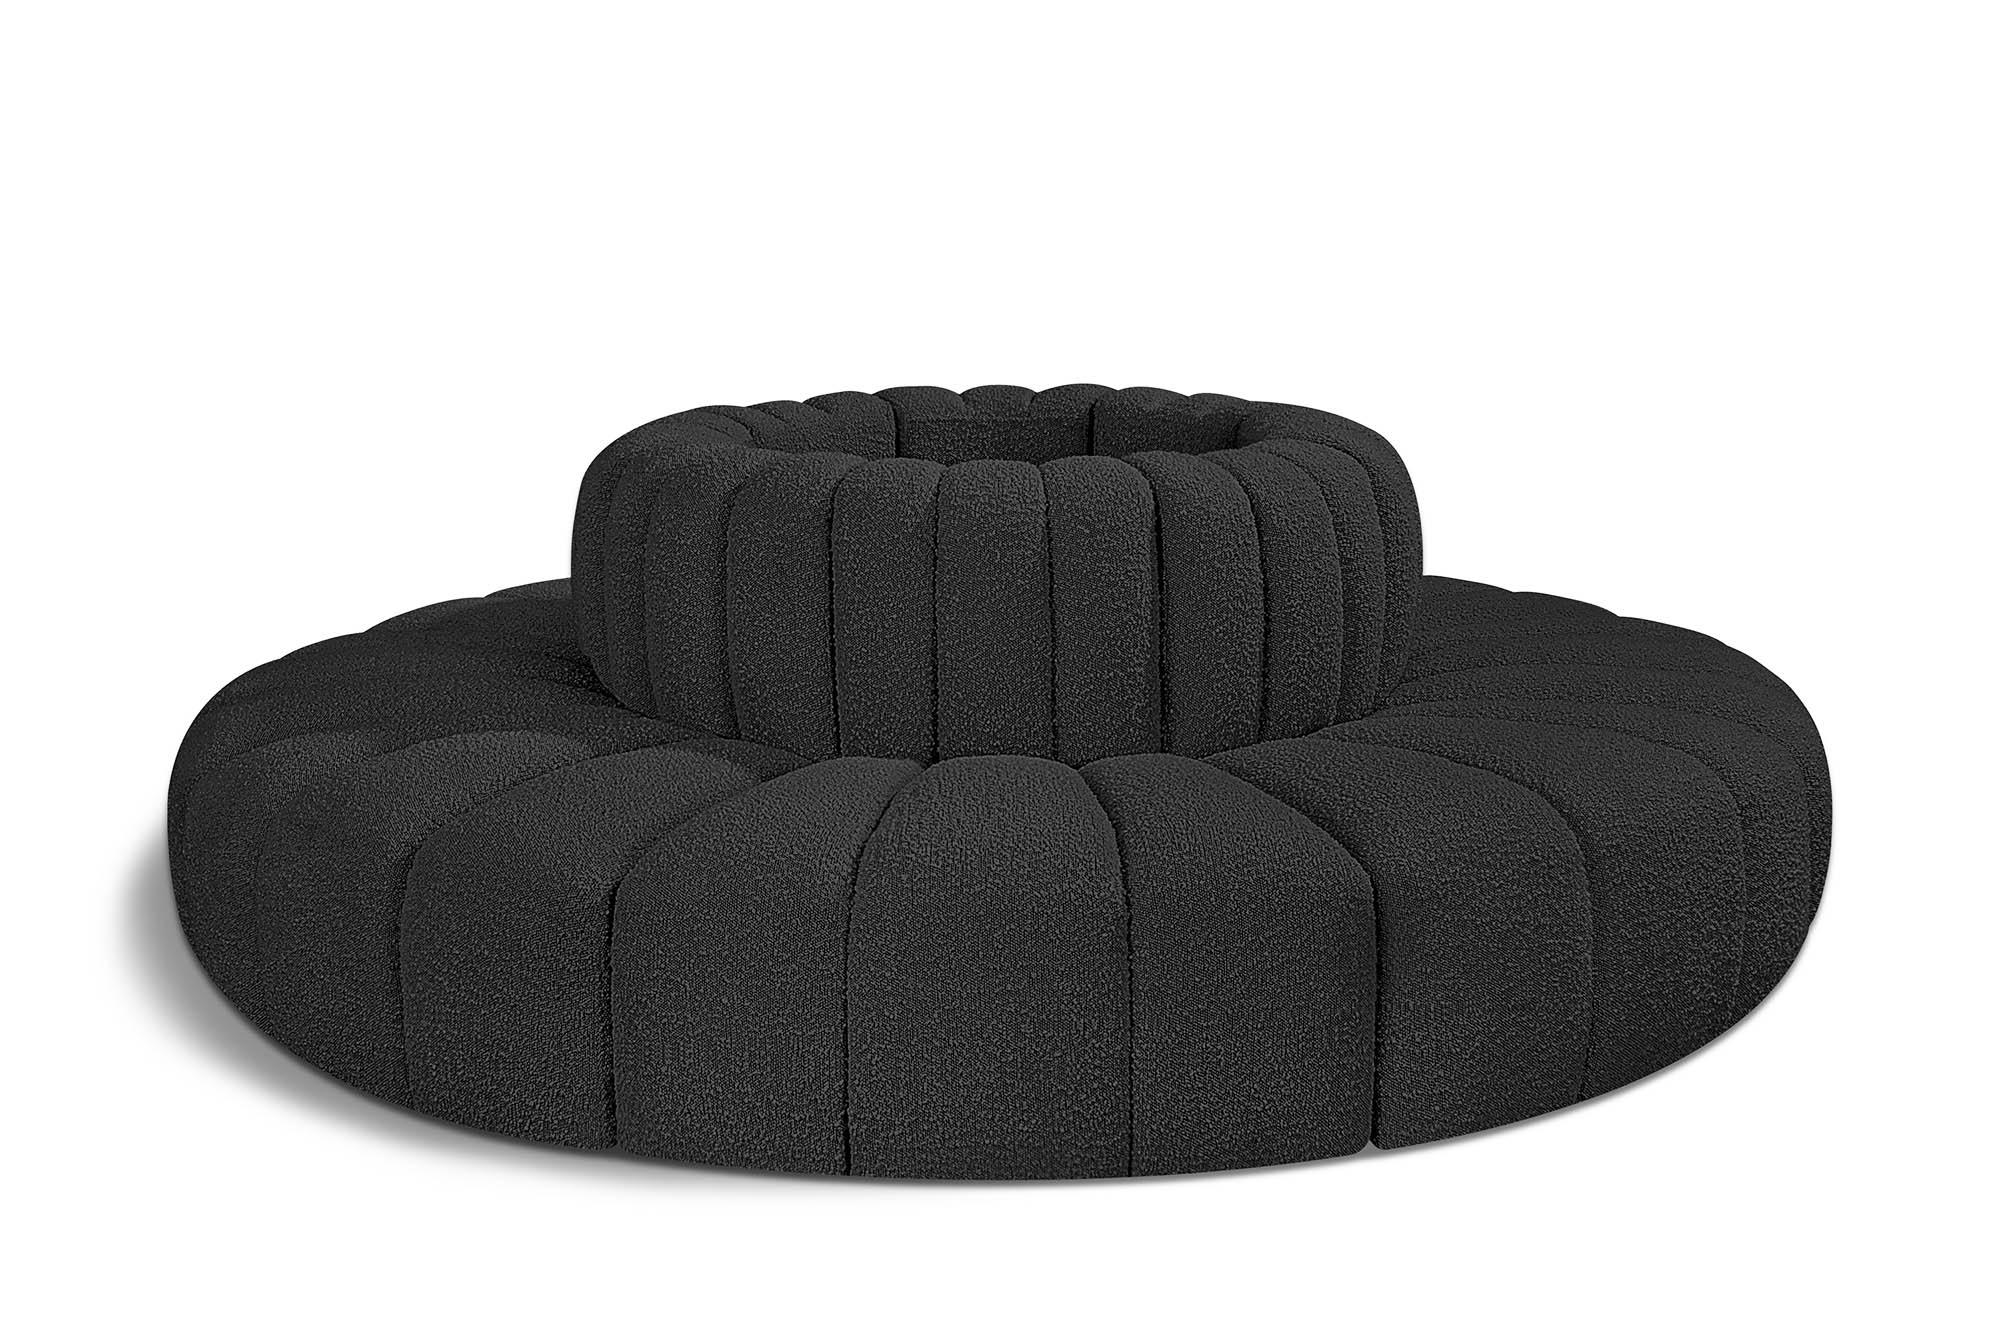 Contemporary, Modern Modular Sectional Sofa ARC 102Black-S8D 102Black-S8D in Black 